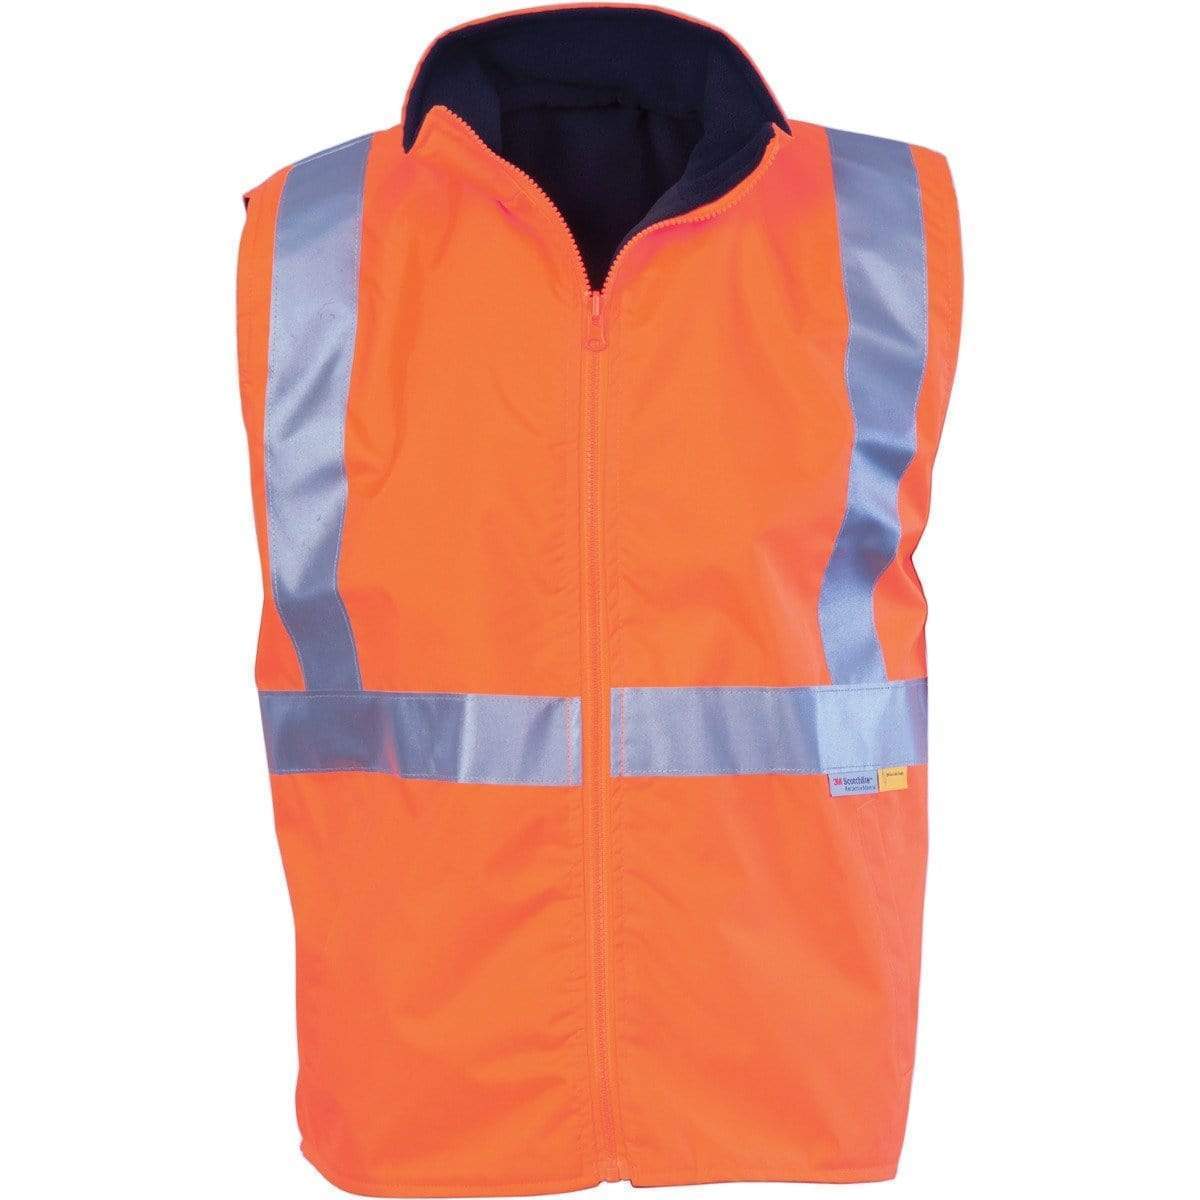 Dnc Workwear Hi-vis Reversible Vest With 3m Reflective Tape - 3865 Work Wear DNC Workwear Orange/Navy S 